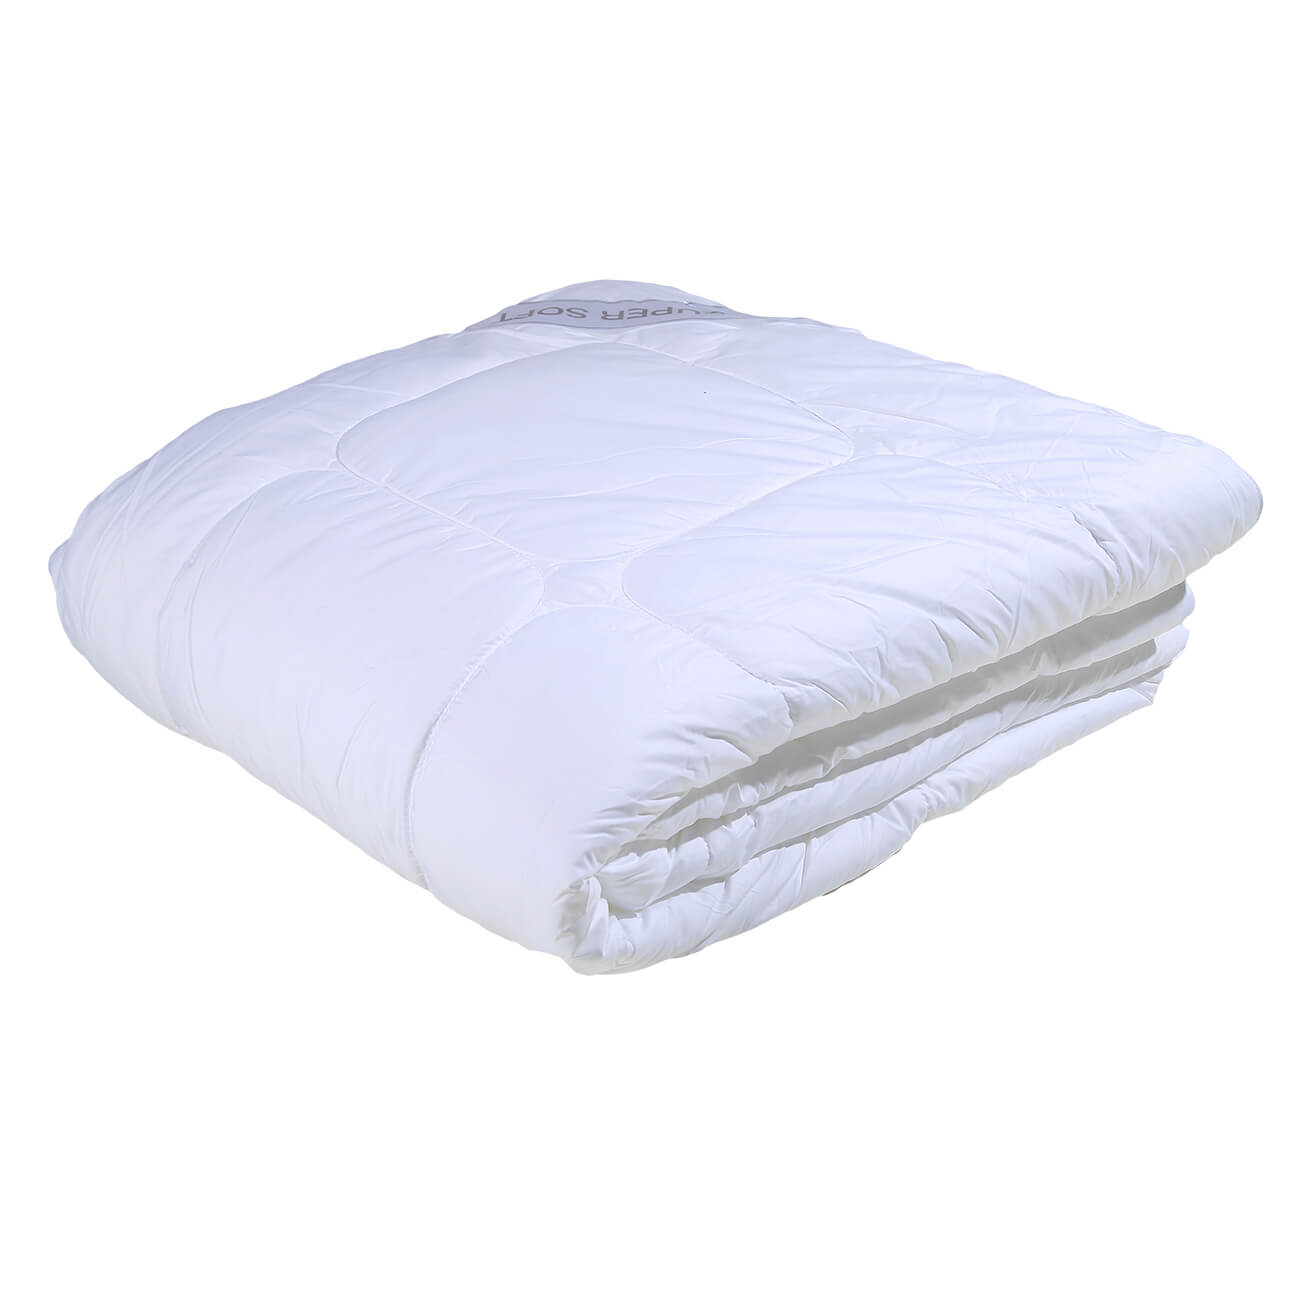 одеяло огнеупорное теплоизоляционное профикамин 7300x610x13 мм Одеяло, 200х220 см, микрофибра, Super Soft